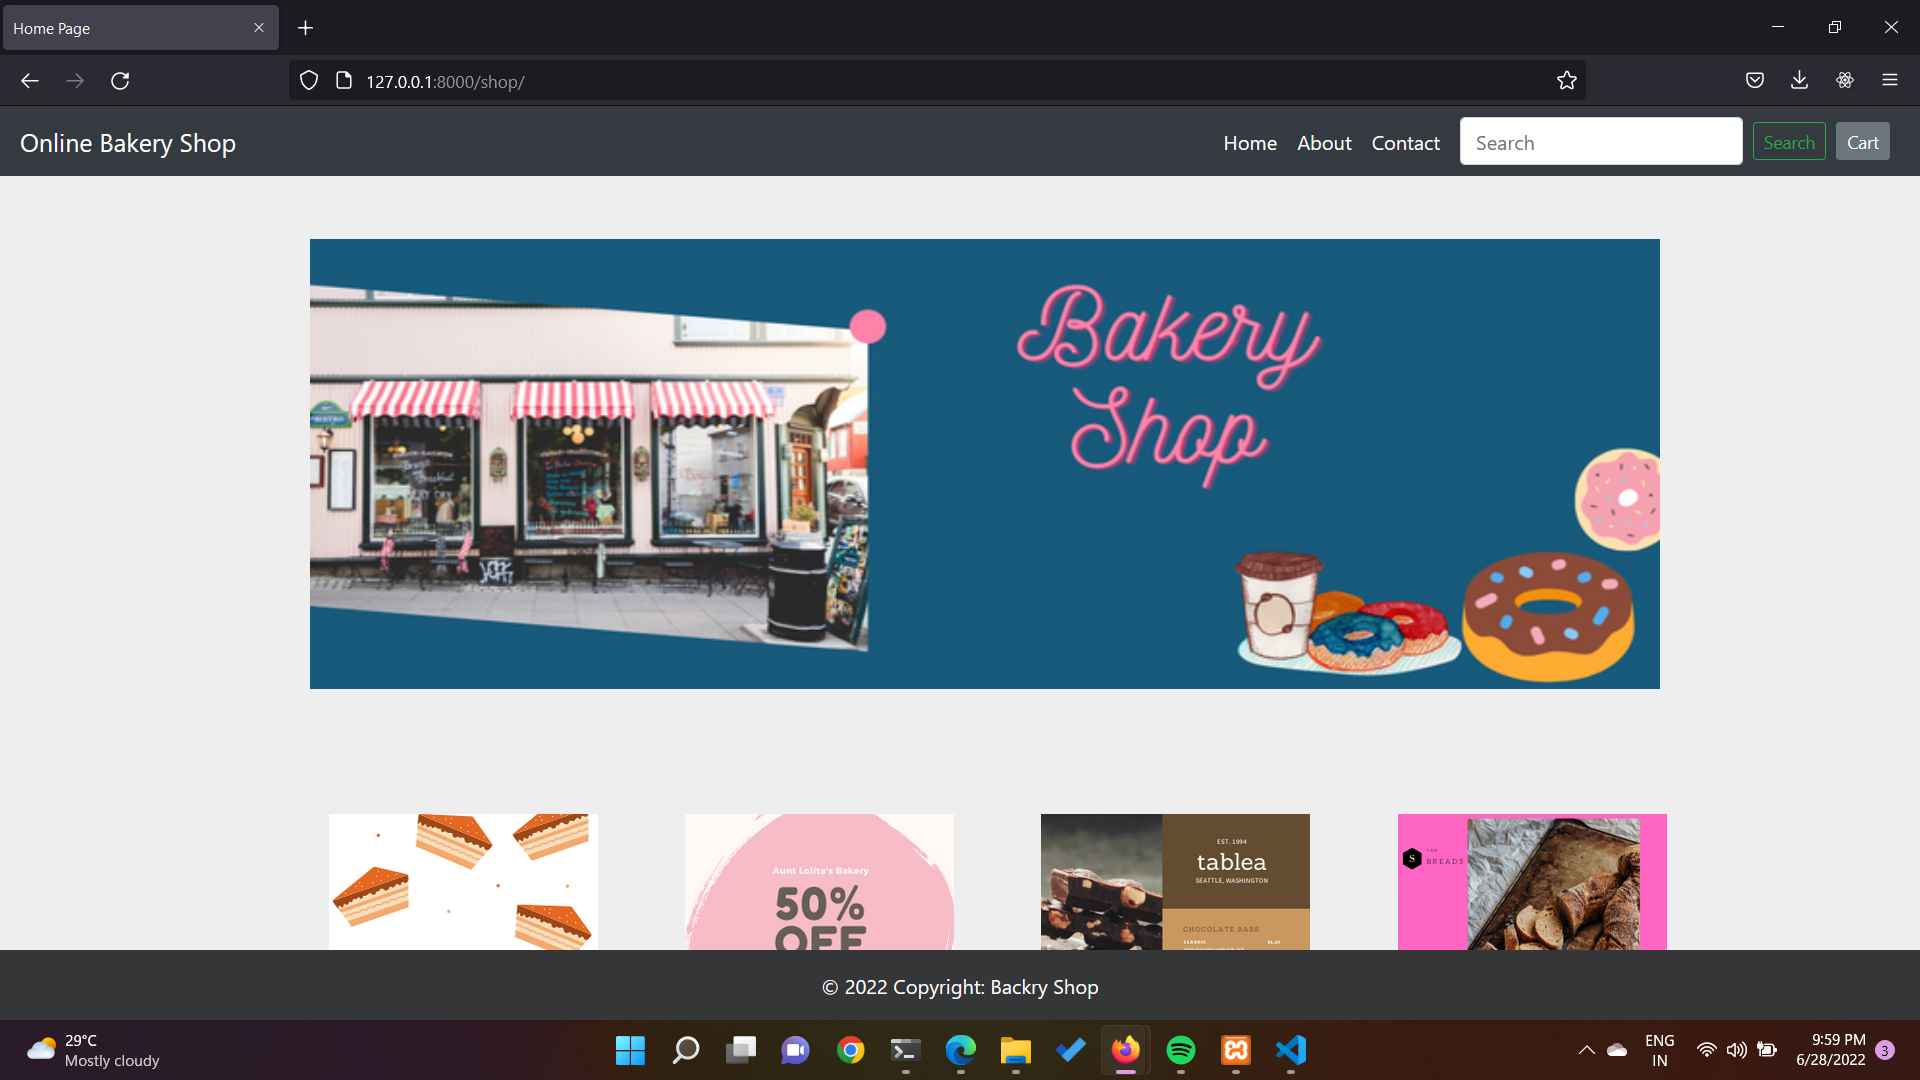 Online Bakery Shop in Python